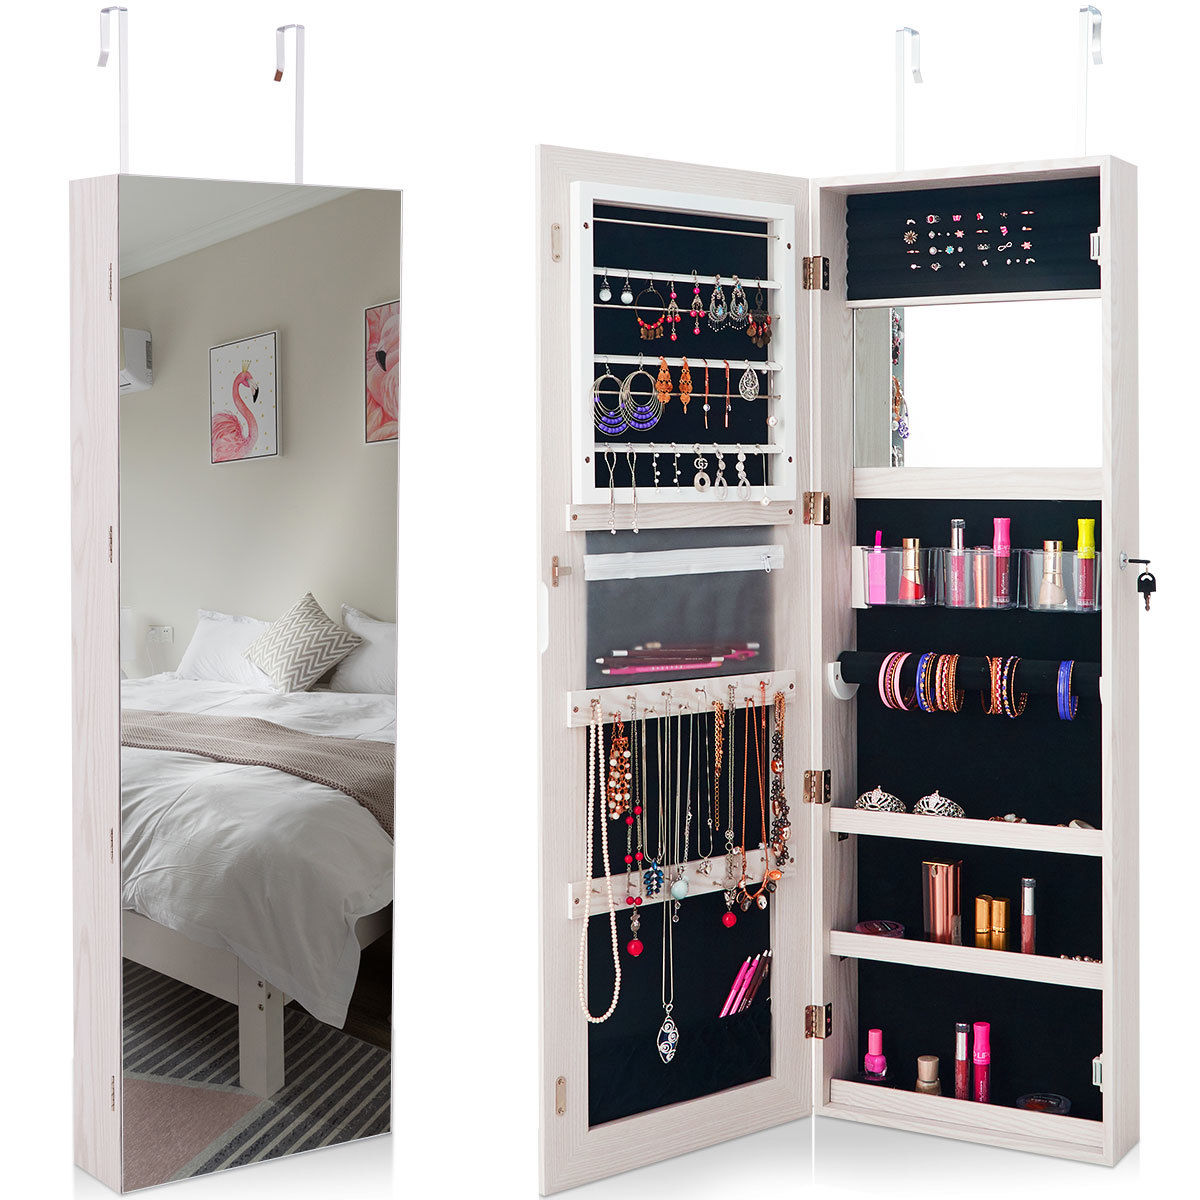 Goplus Wall&Door Mounted Jewelry Cabinet Lockable Storage Organizer w/ Frameless Mirror